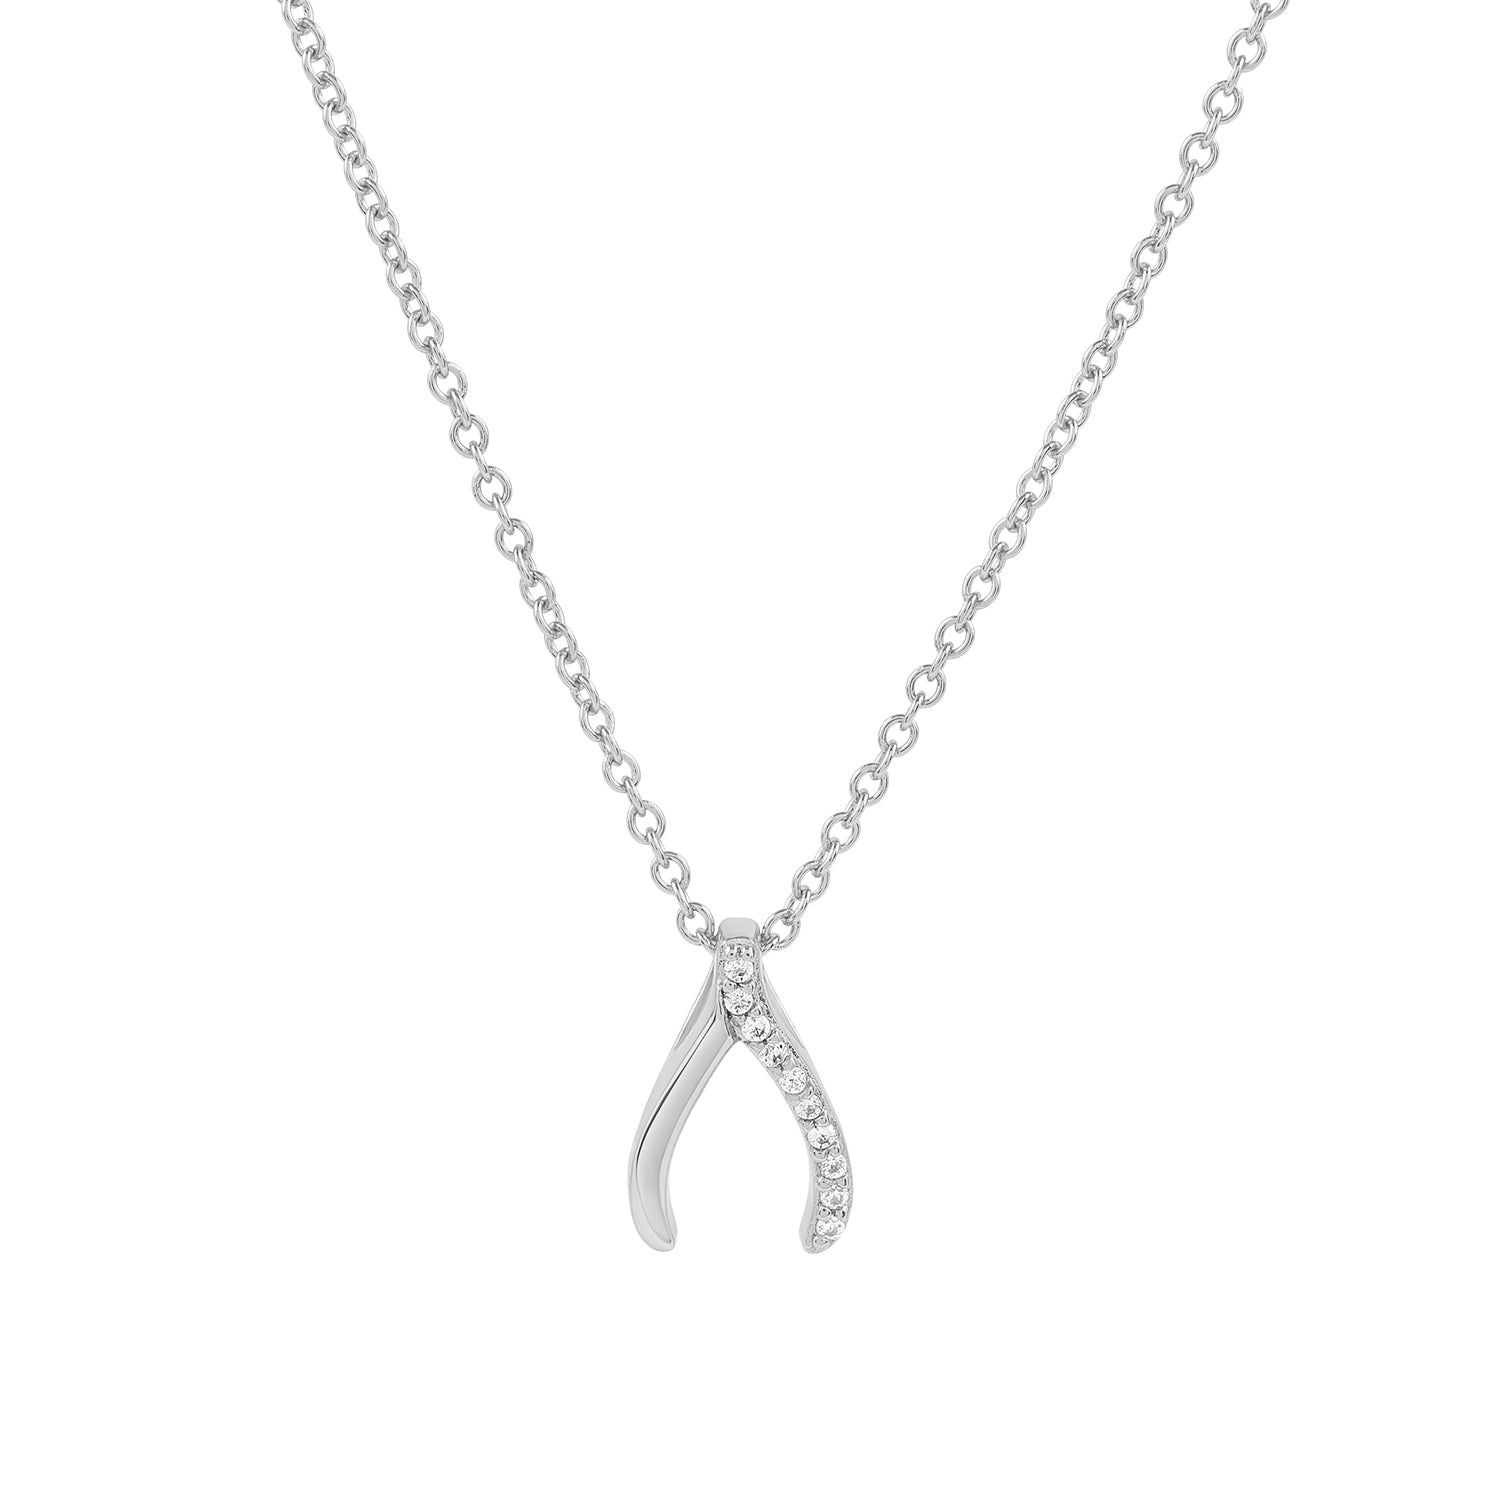 Elegant and minimalist 925 silver wishbone pendant necklace set with cubic zirconia stones.